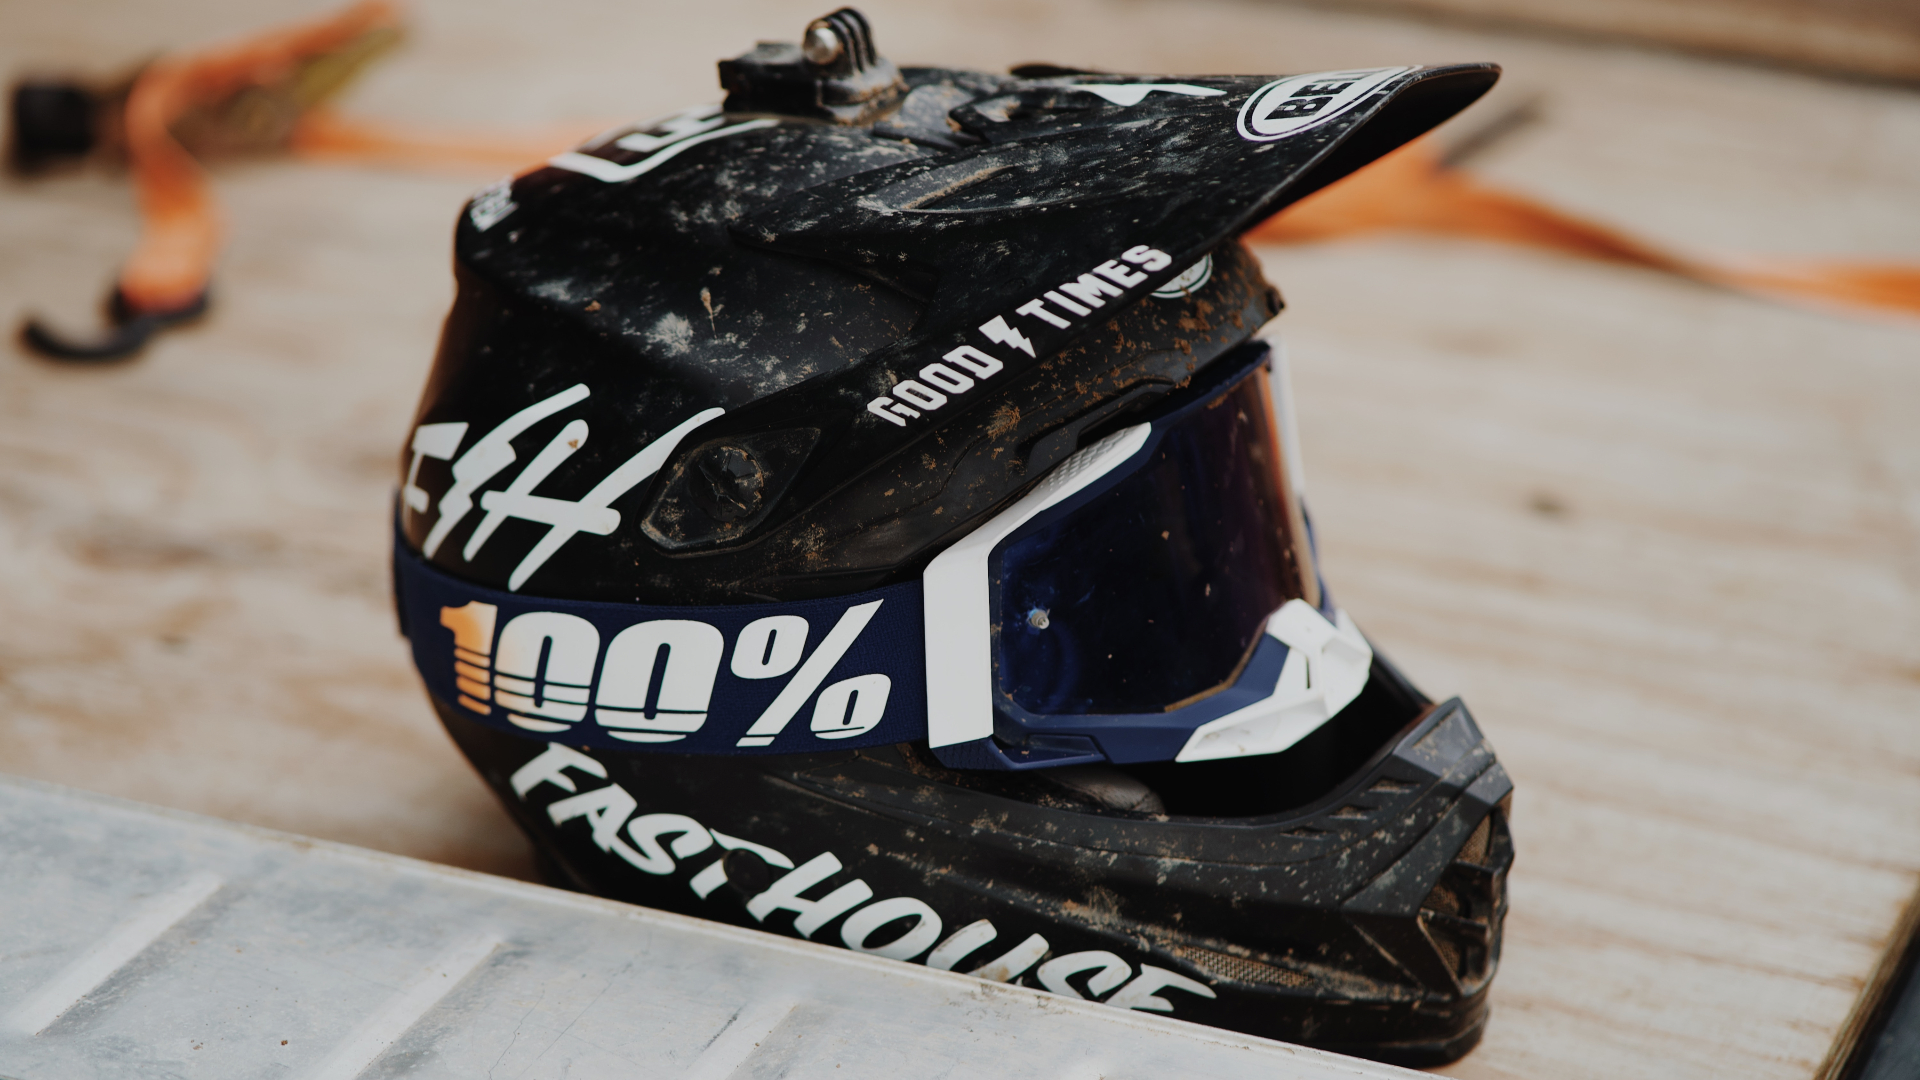 Muddy Bell Motocross Helmet sitting on the ground